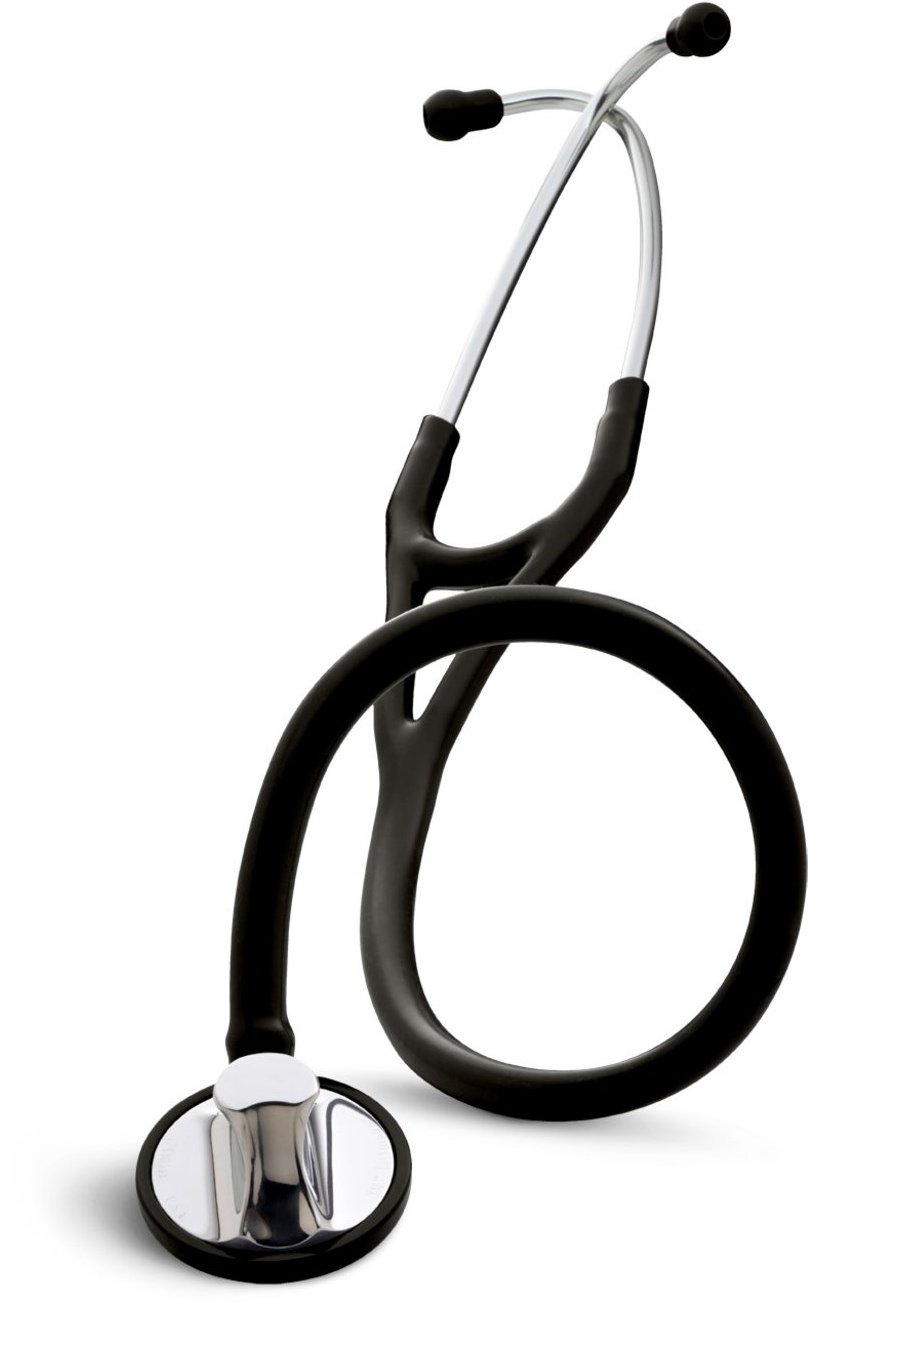 3M™ Littmann® Master Cardiology™ Stethoscope